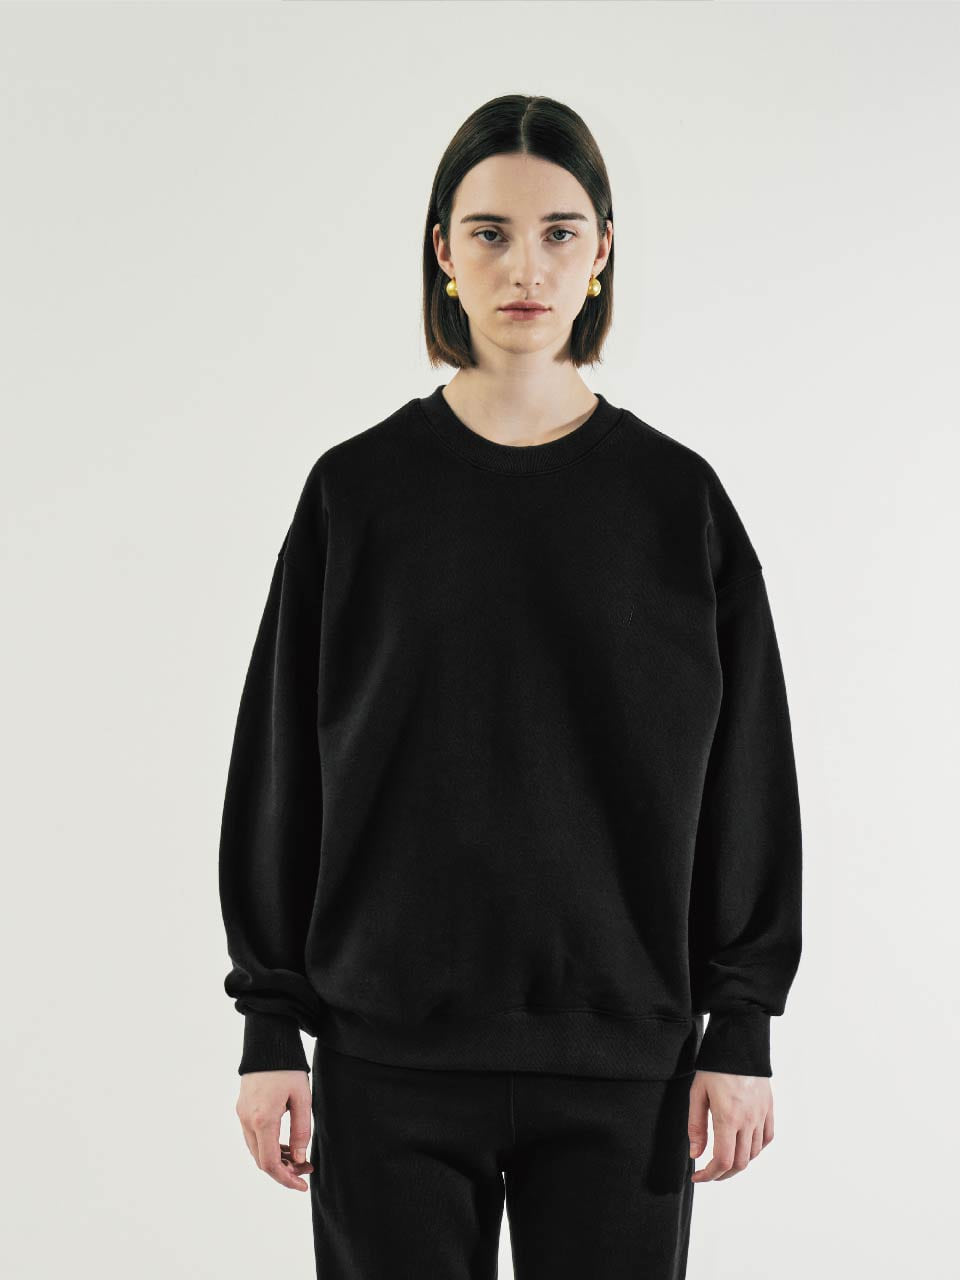 J Sweatshirts(Black)